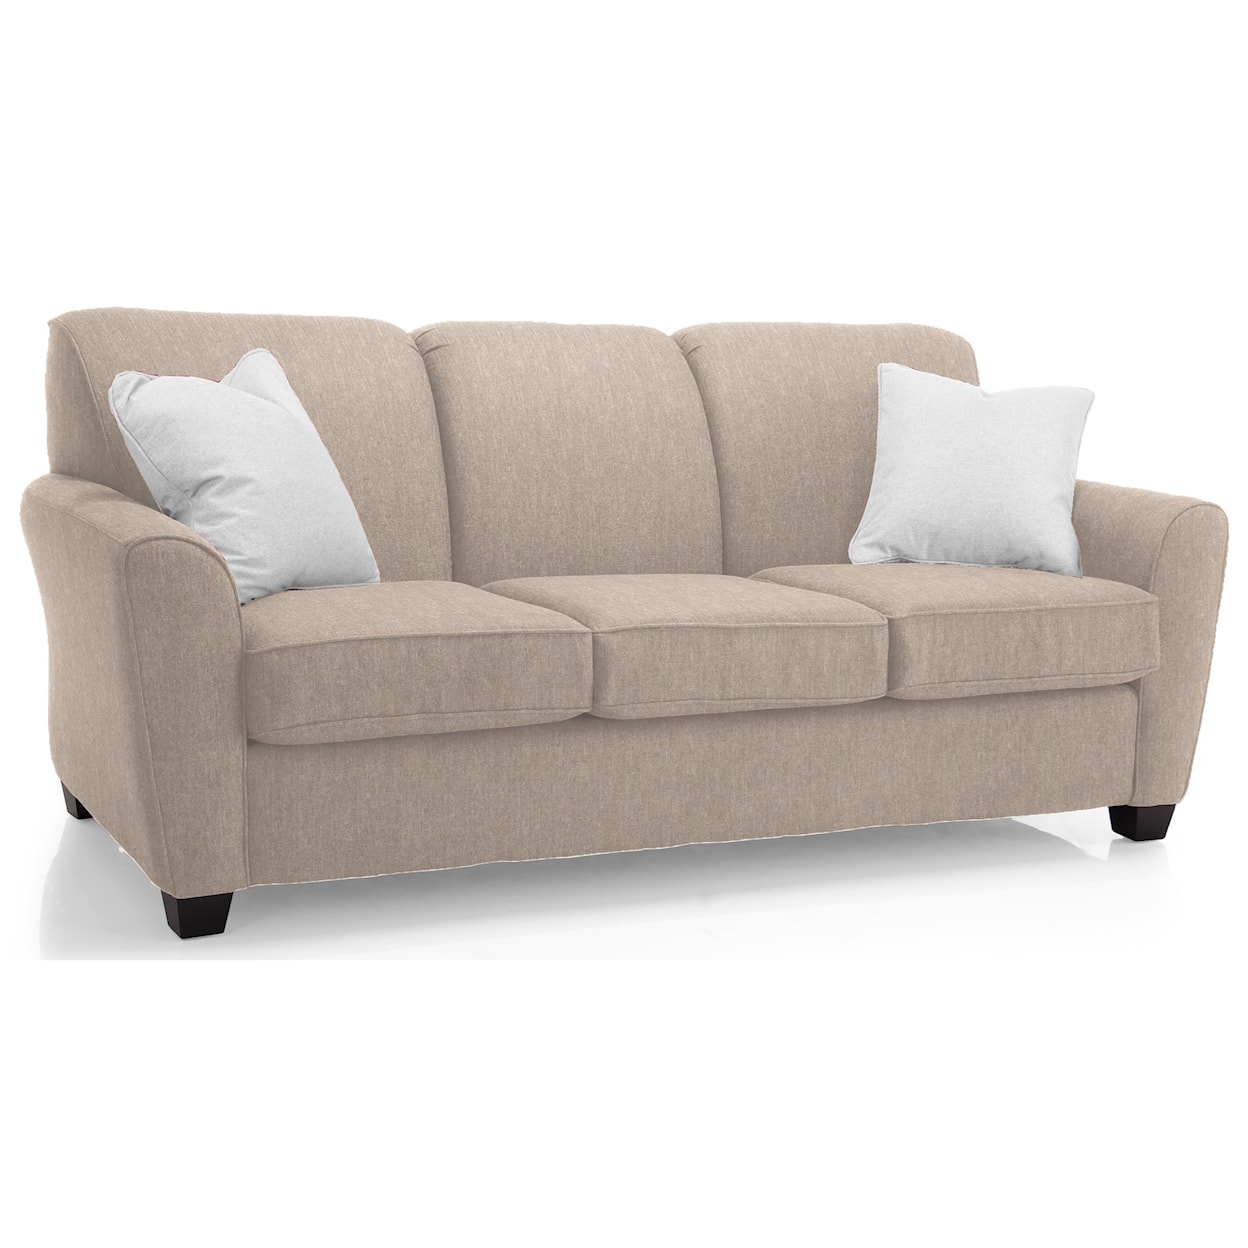 Taelor Designs 2404 Transitional Sofa